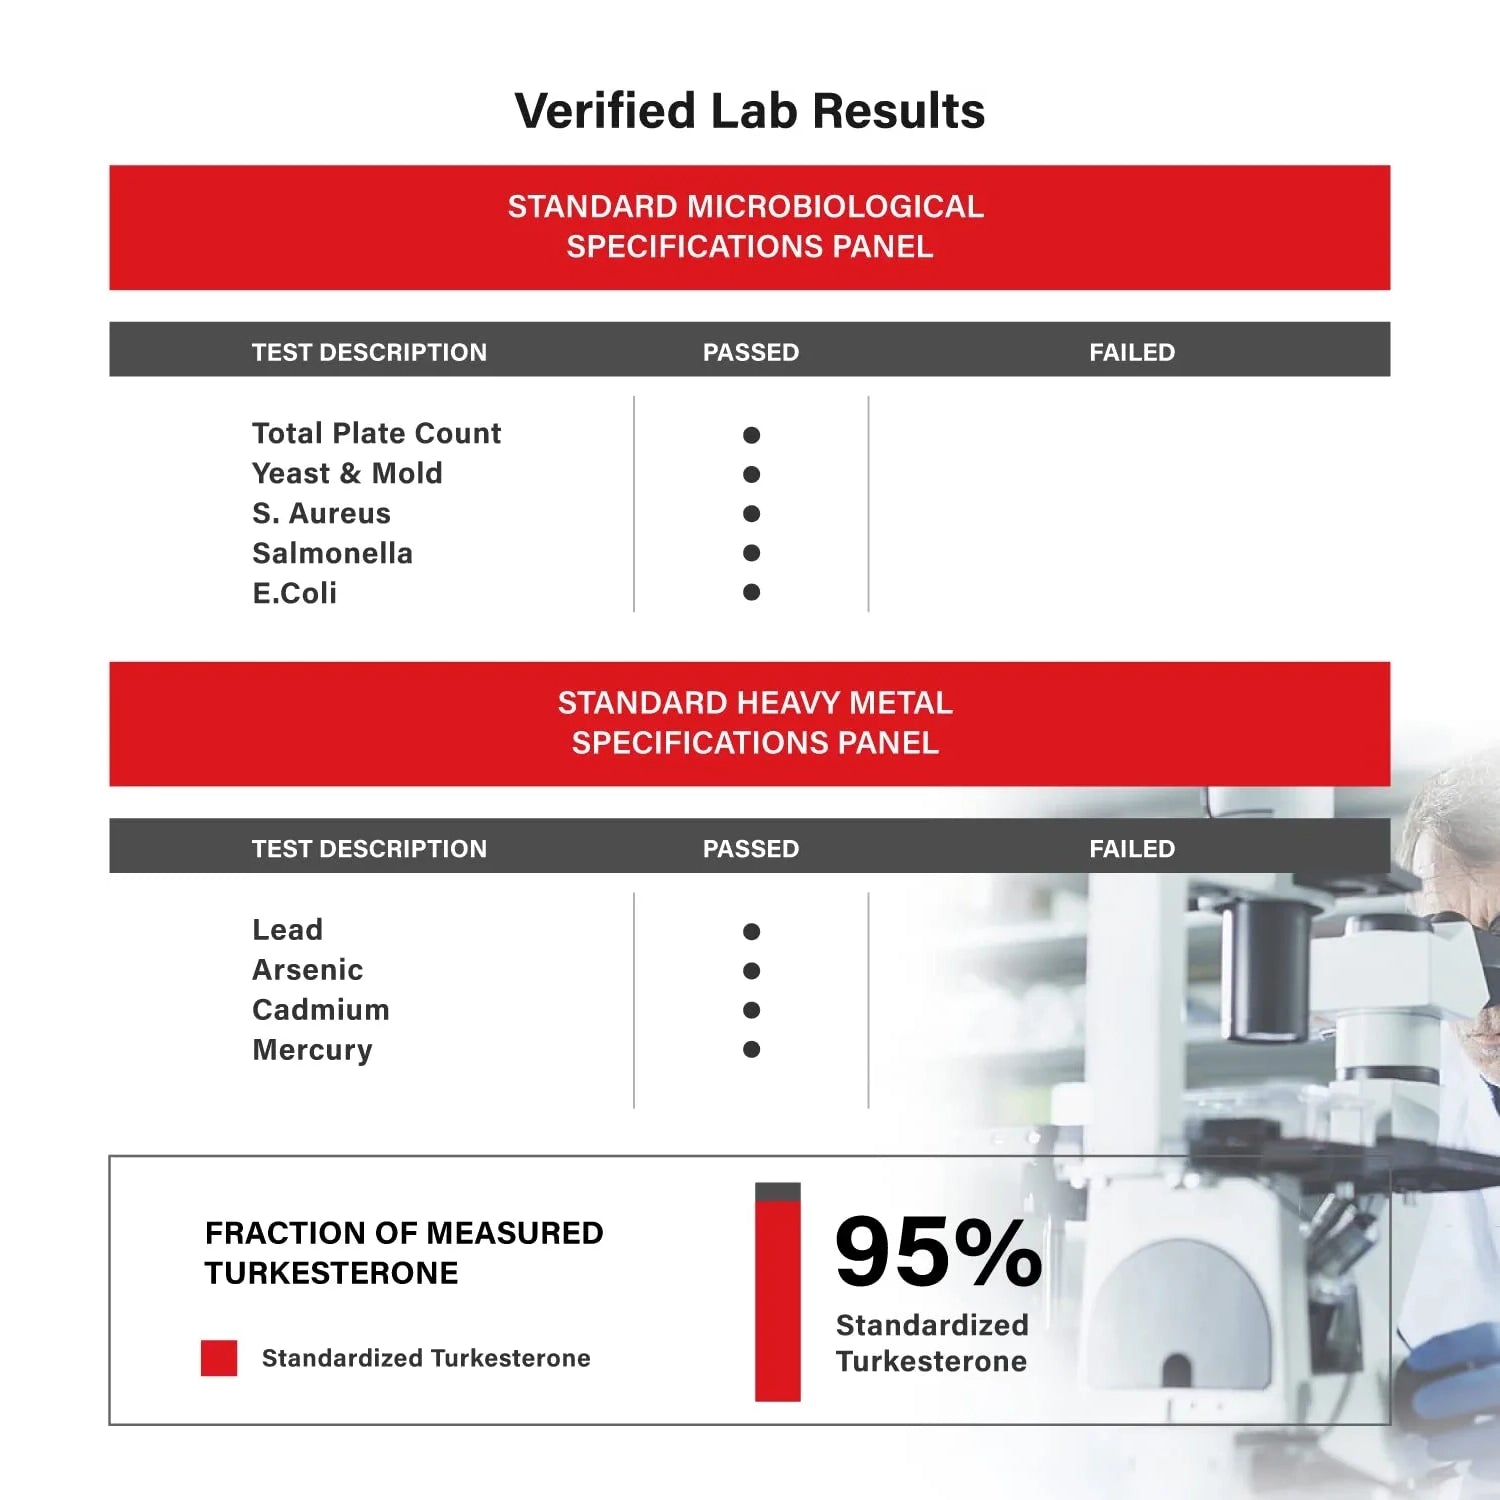 Turkesterone verified lab results